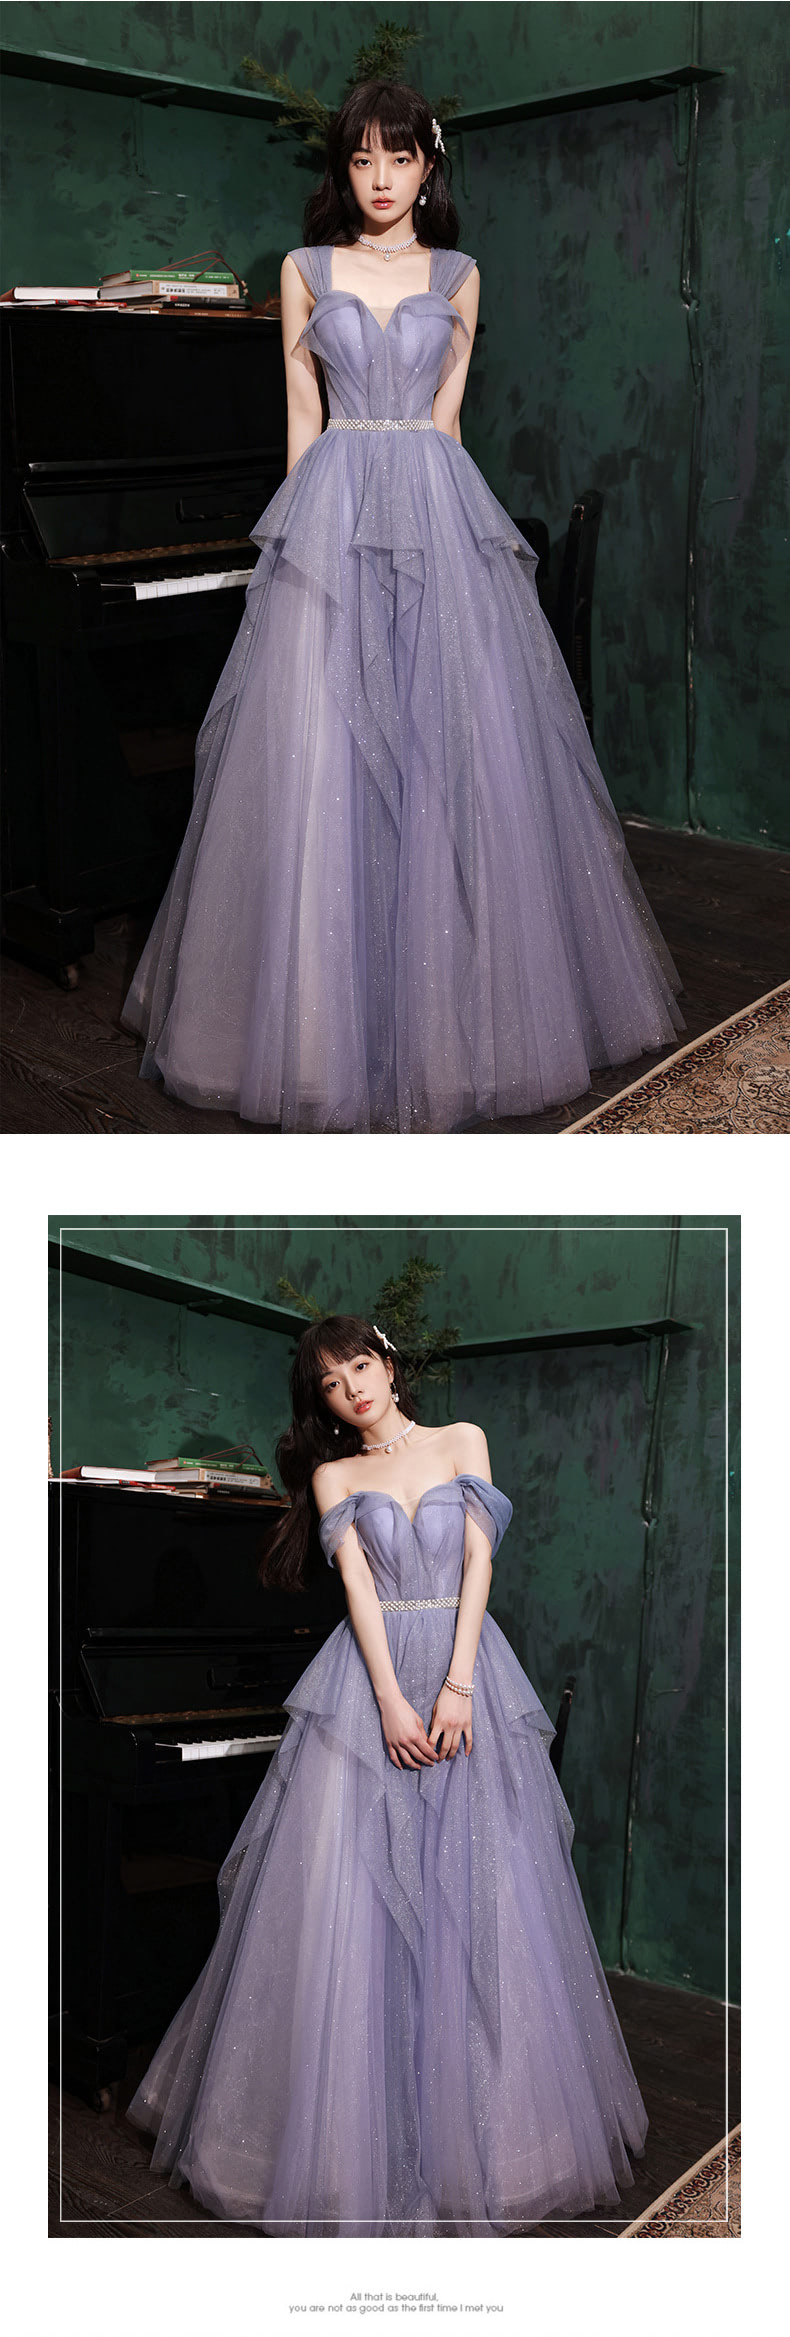 Elegant-Purple-Puffy-Ball-Gown-Evening-Formal-Homecoming-Dress09.jpg